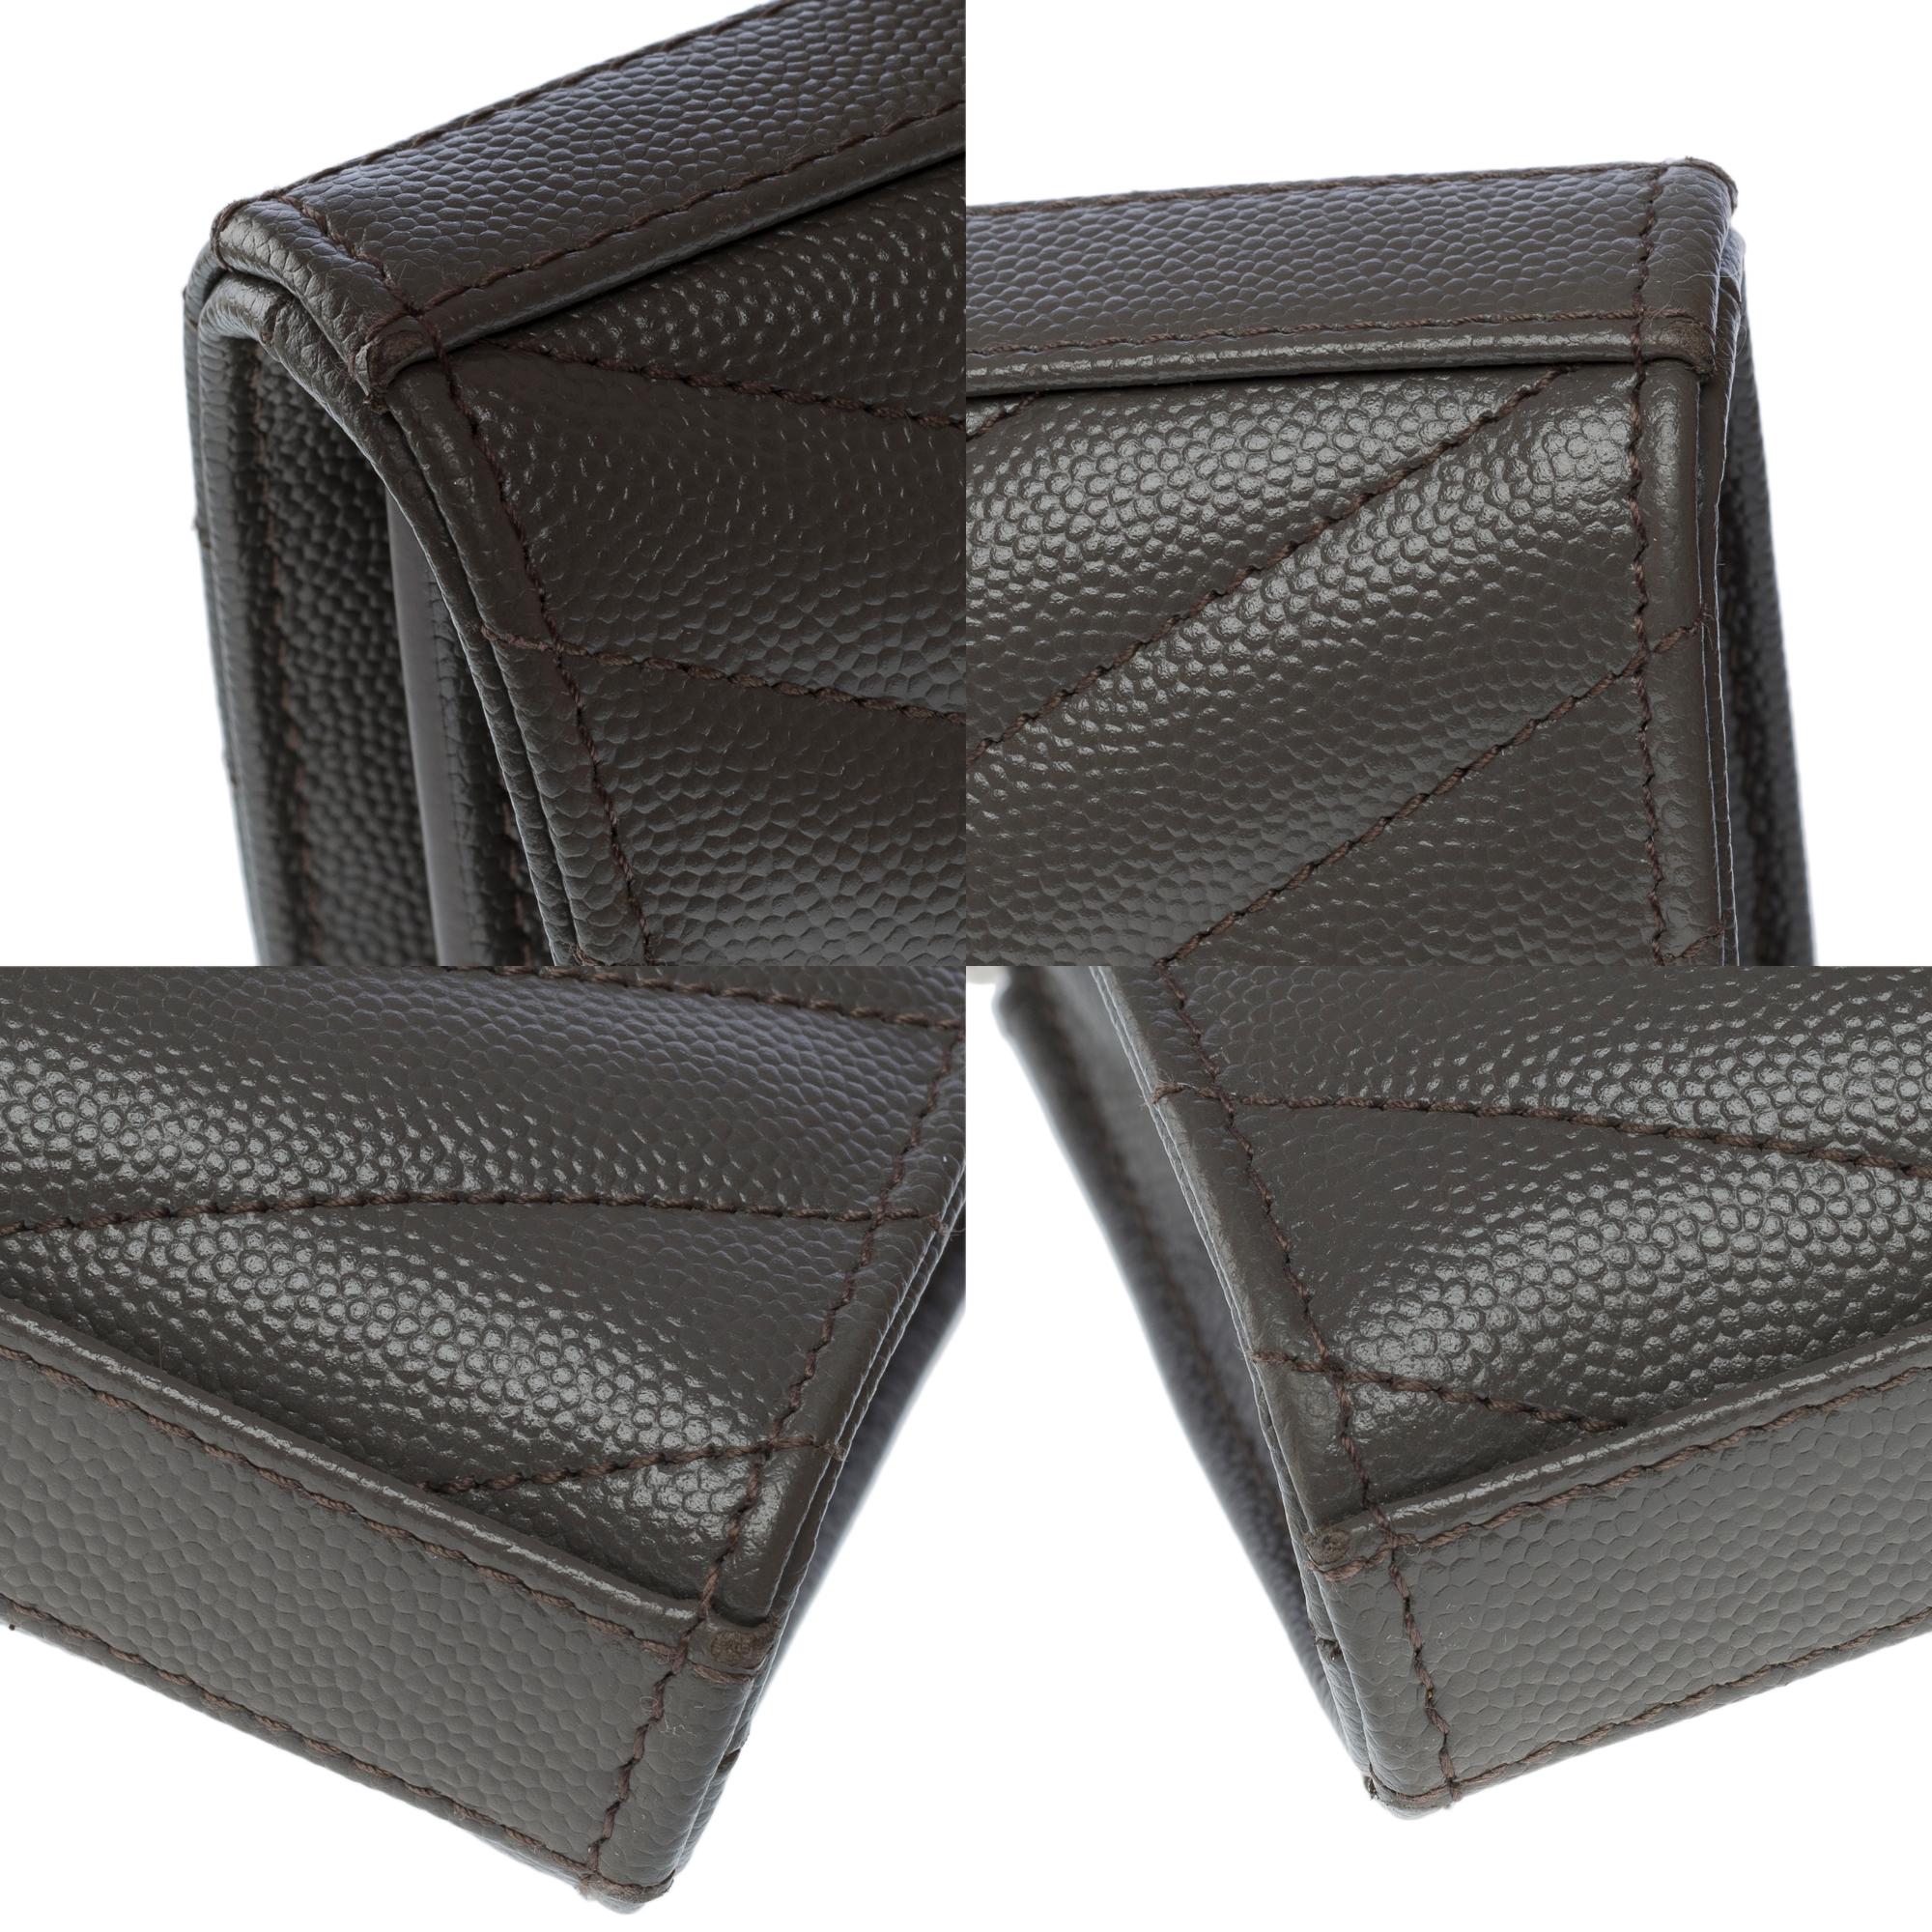 New YSL Pochette Cassandre classic shoulder bag in Grey leather, SHW For Sale 7